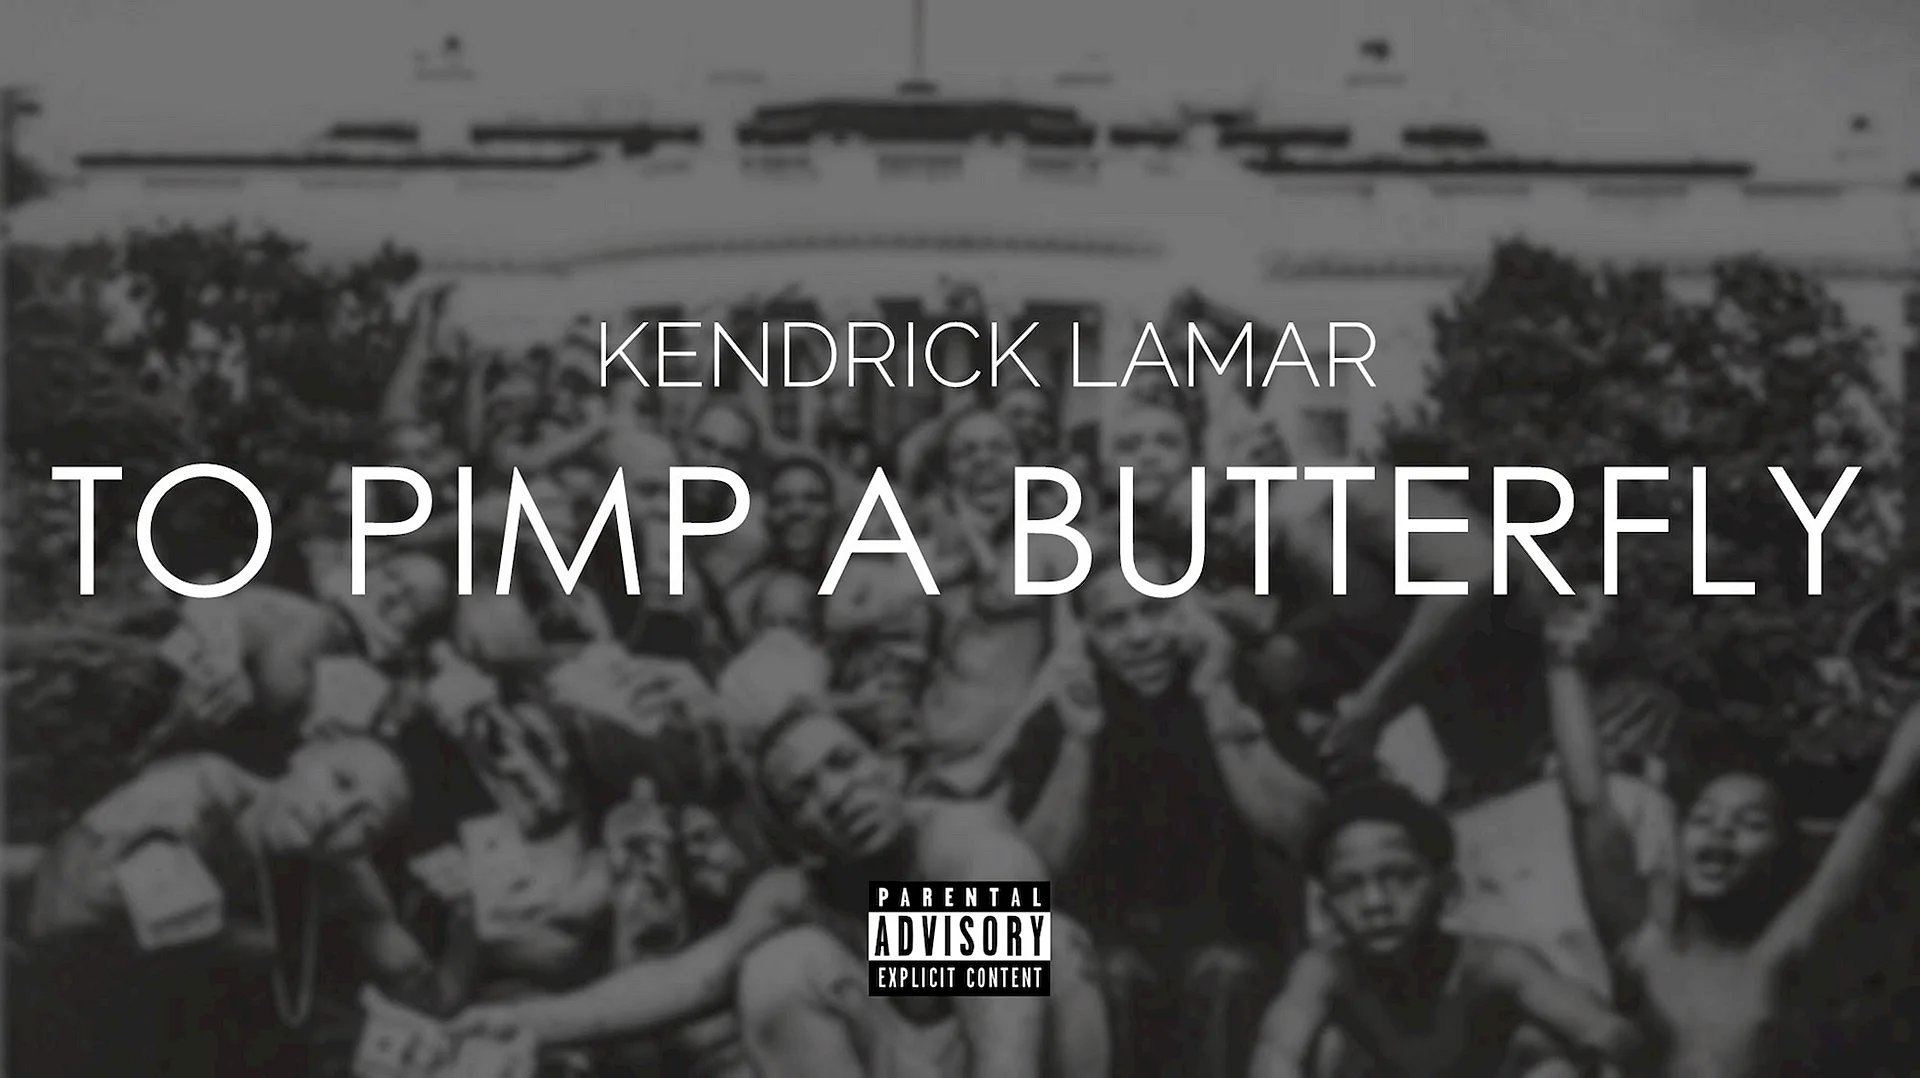 Kendrick Lamar To Pimp A Butterfly Wallpaper